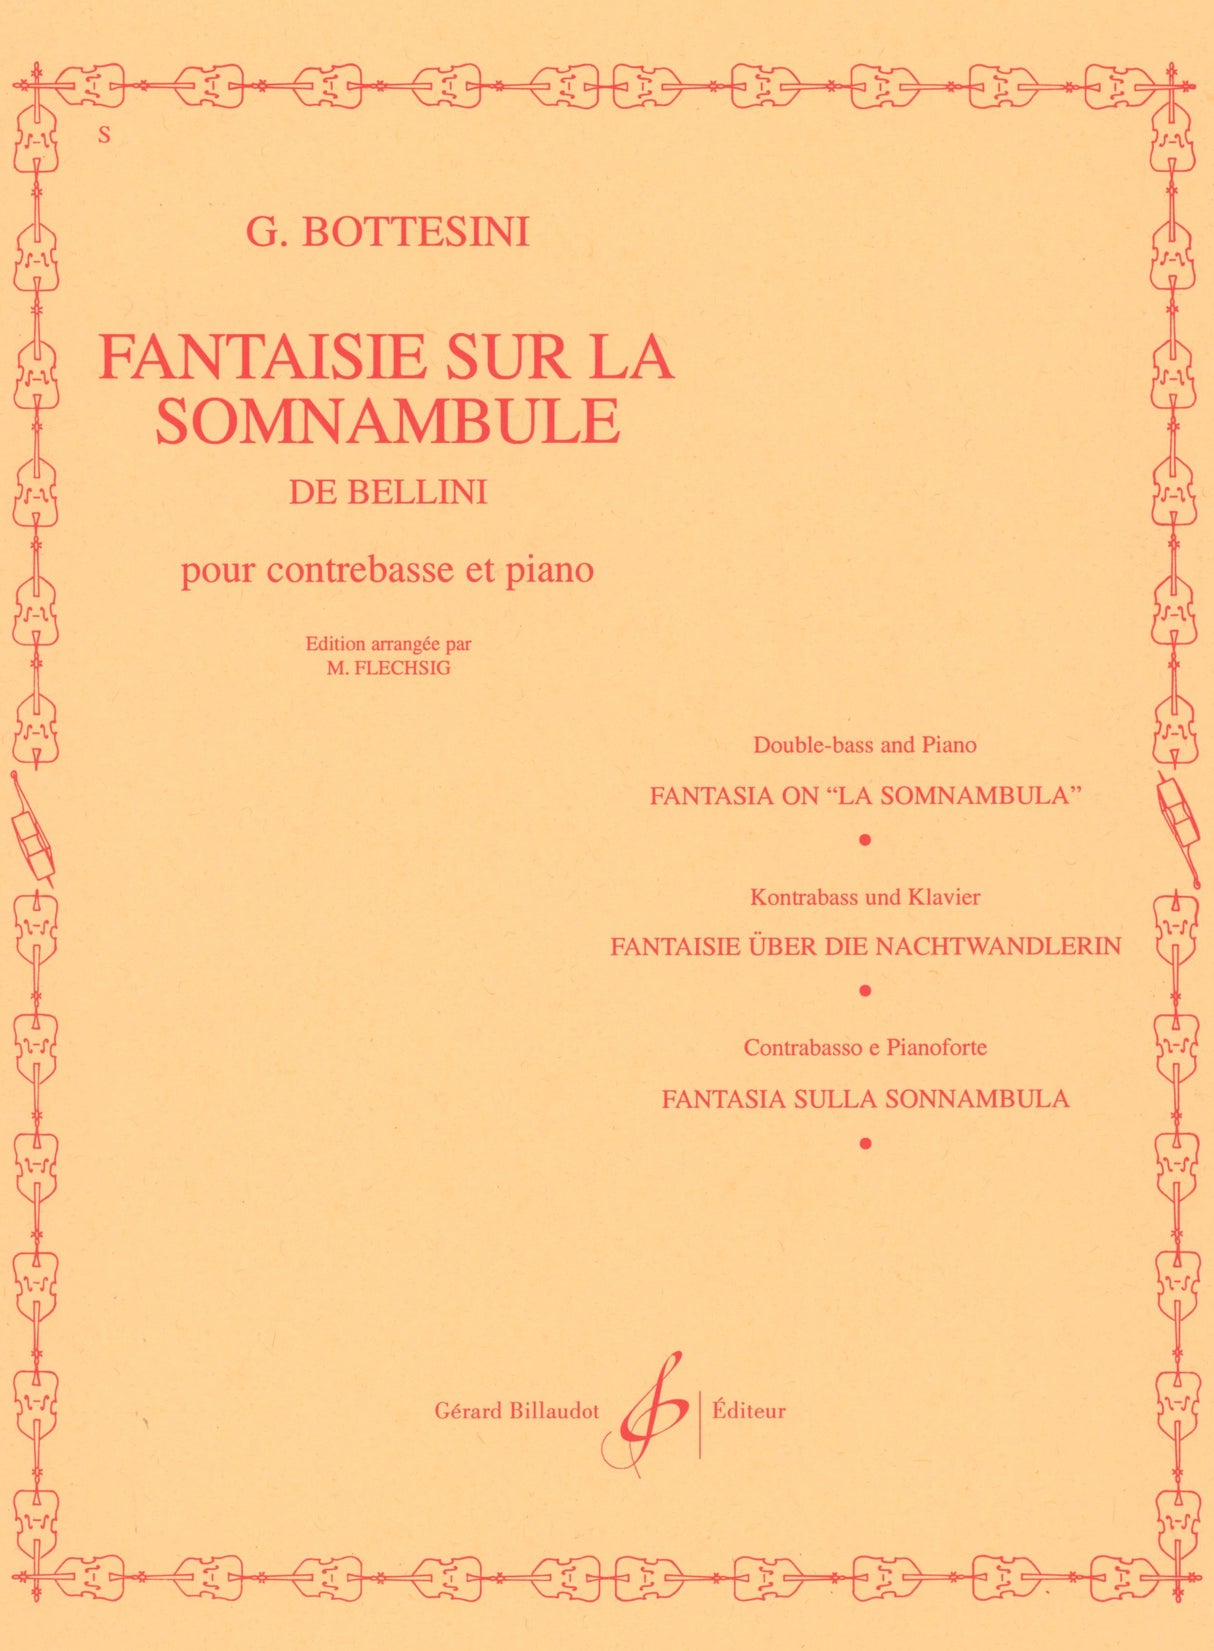 Bottesini: Fantasy on "La Sonnambula"